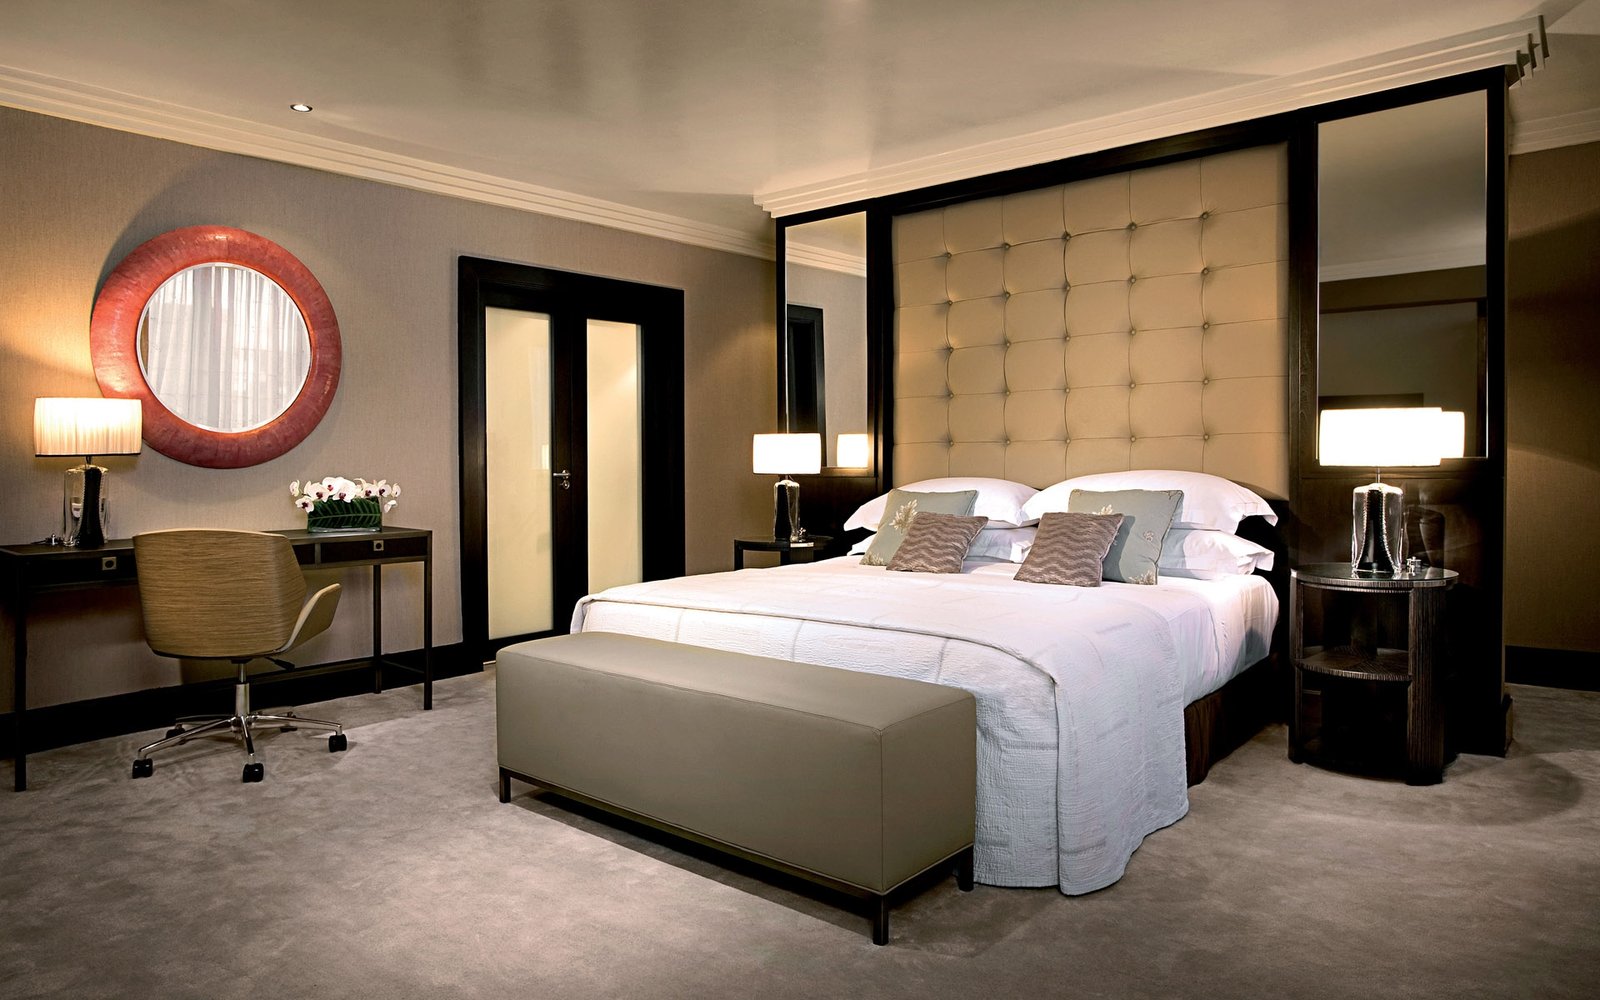 Traditional-bedroom-interior-design-5